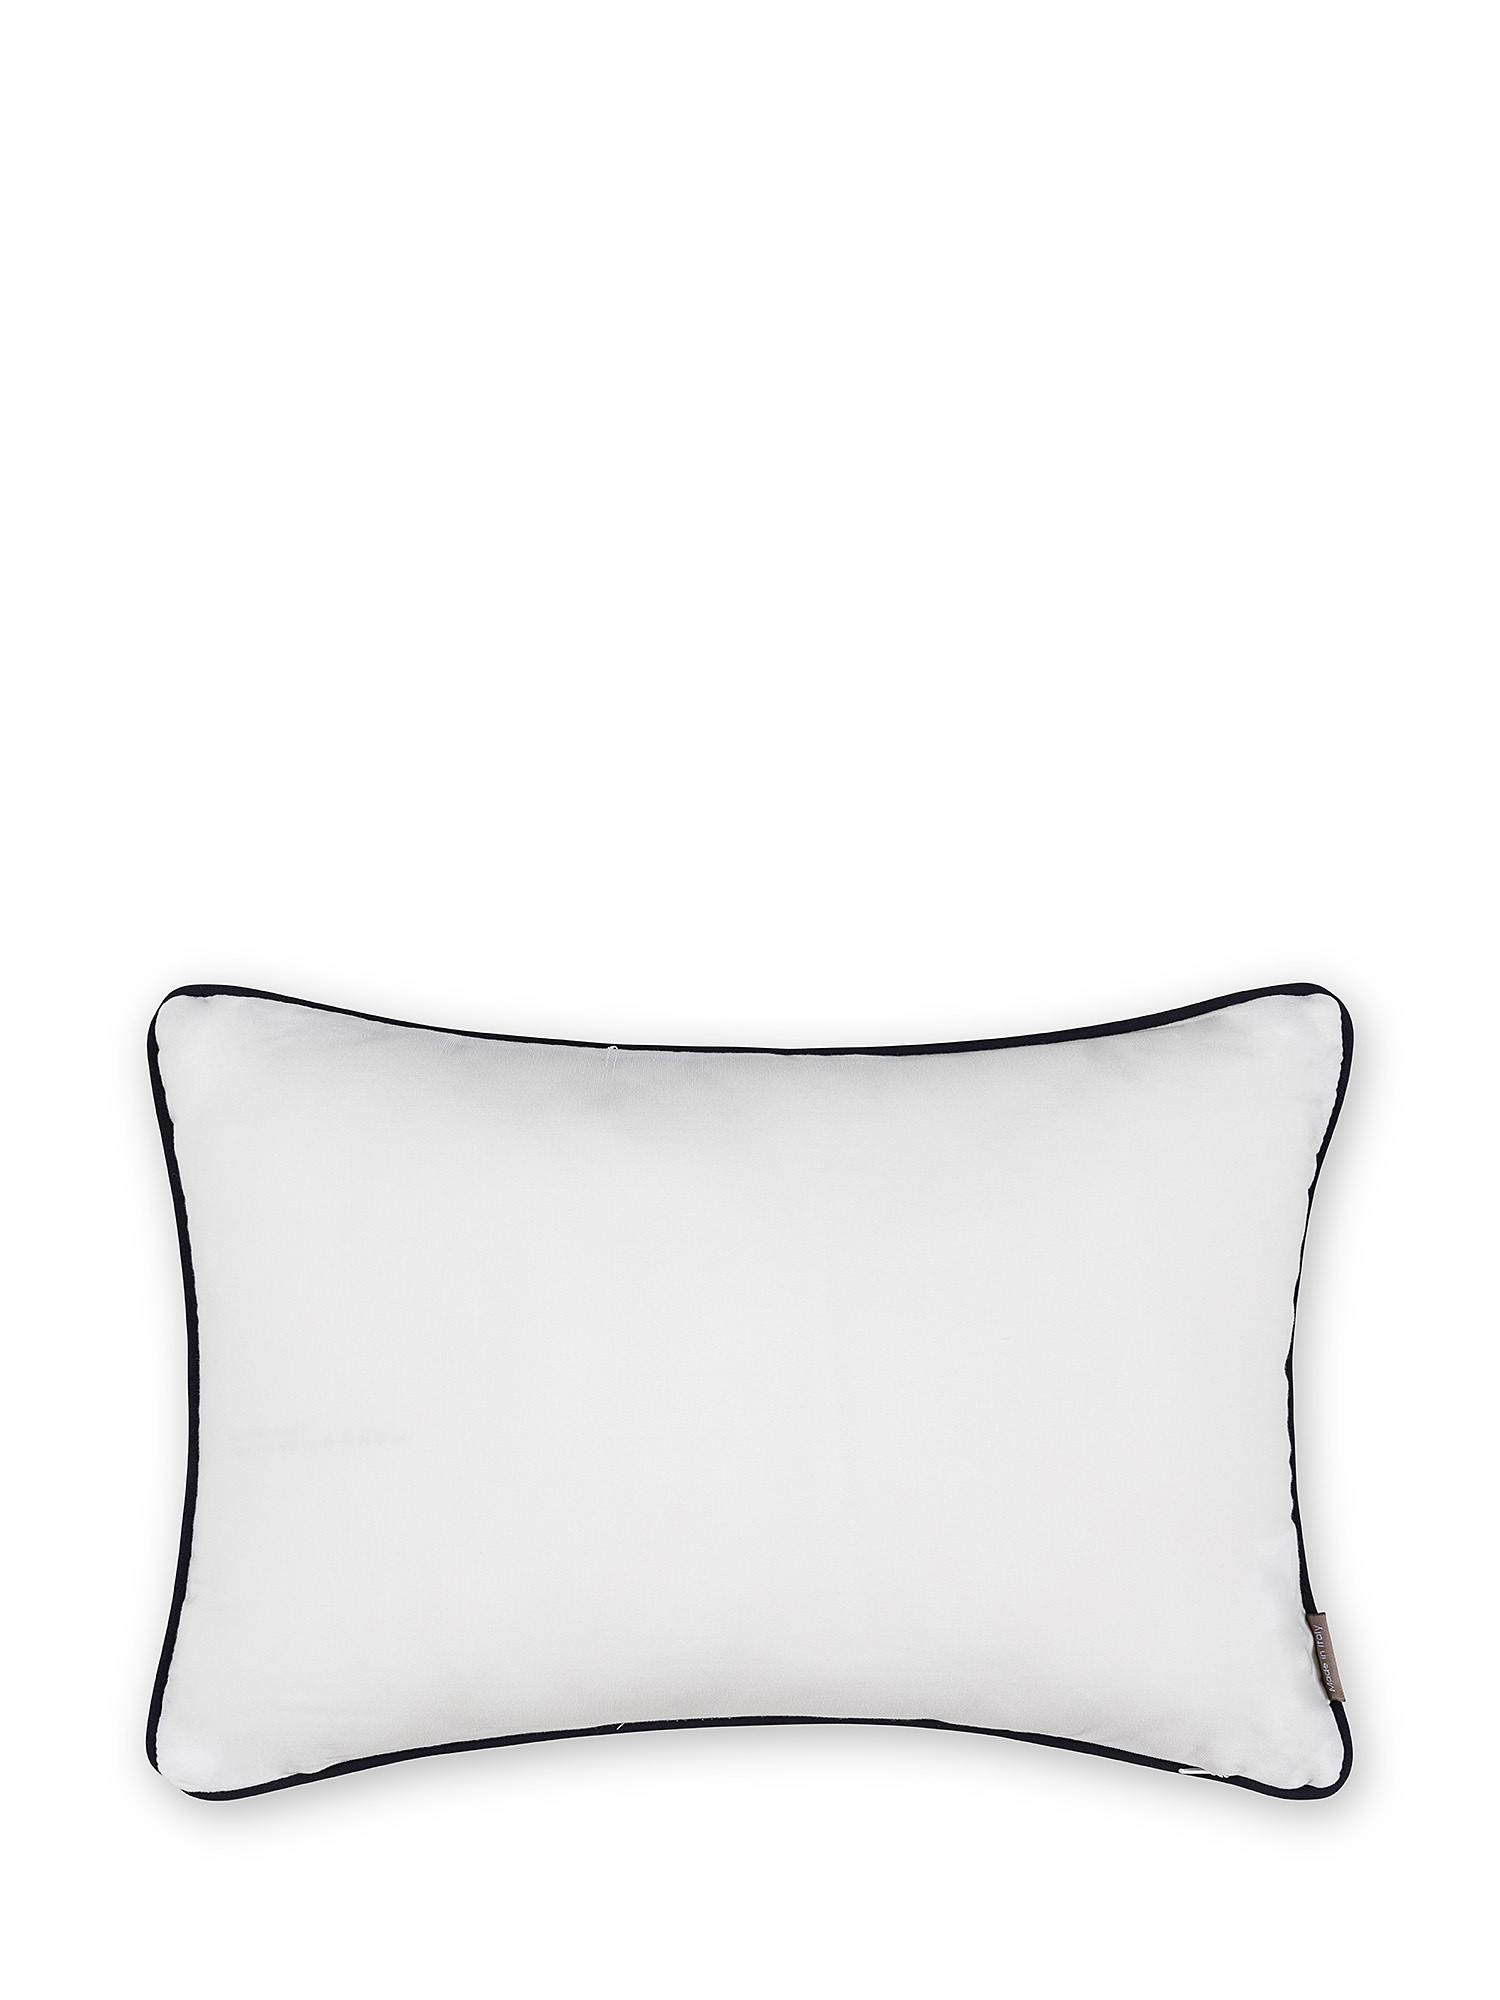 Cuscino da esterno in teflon 30x50cm, Bianco, large image number 1